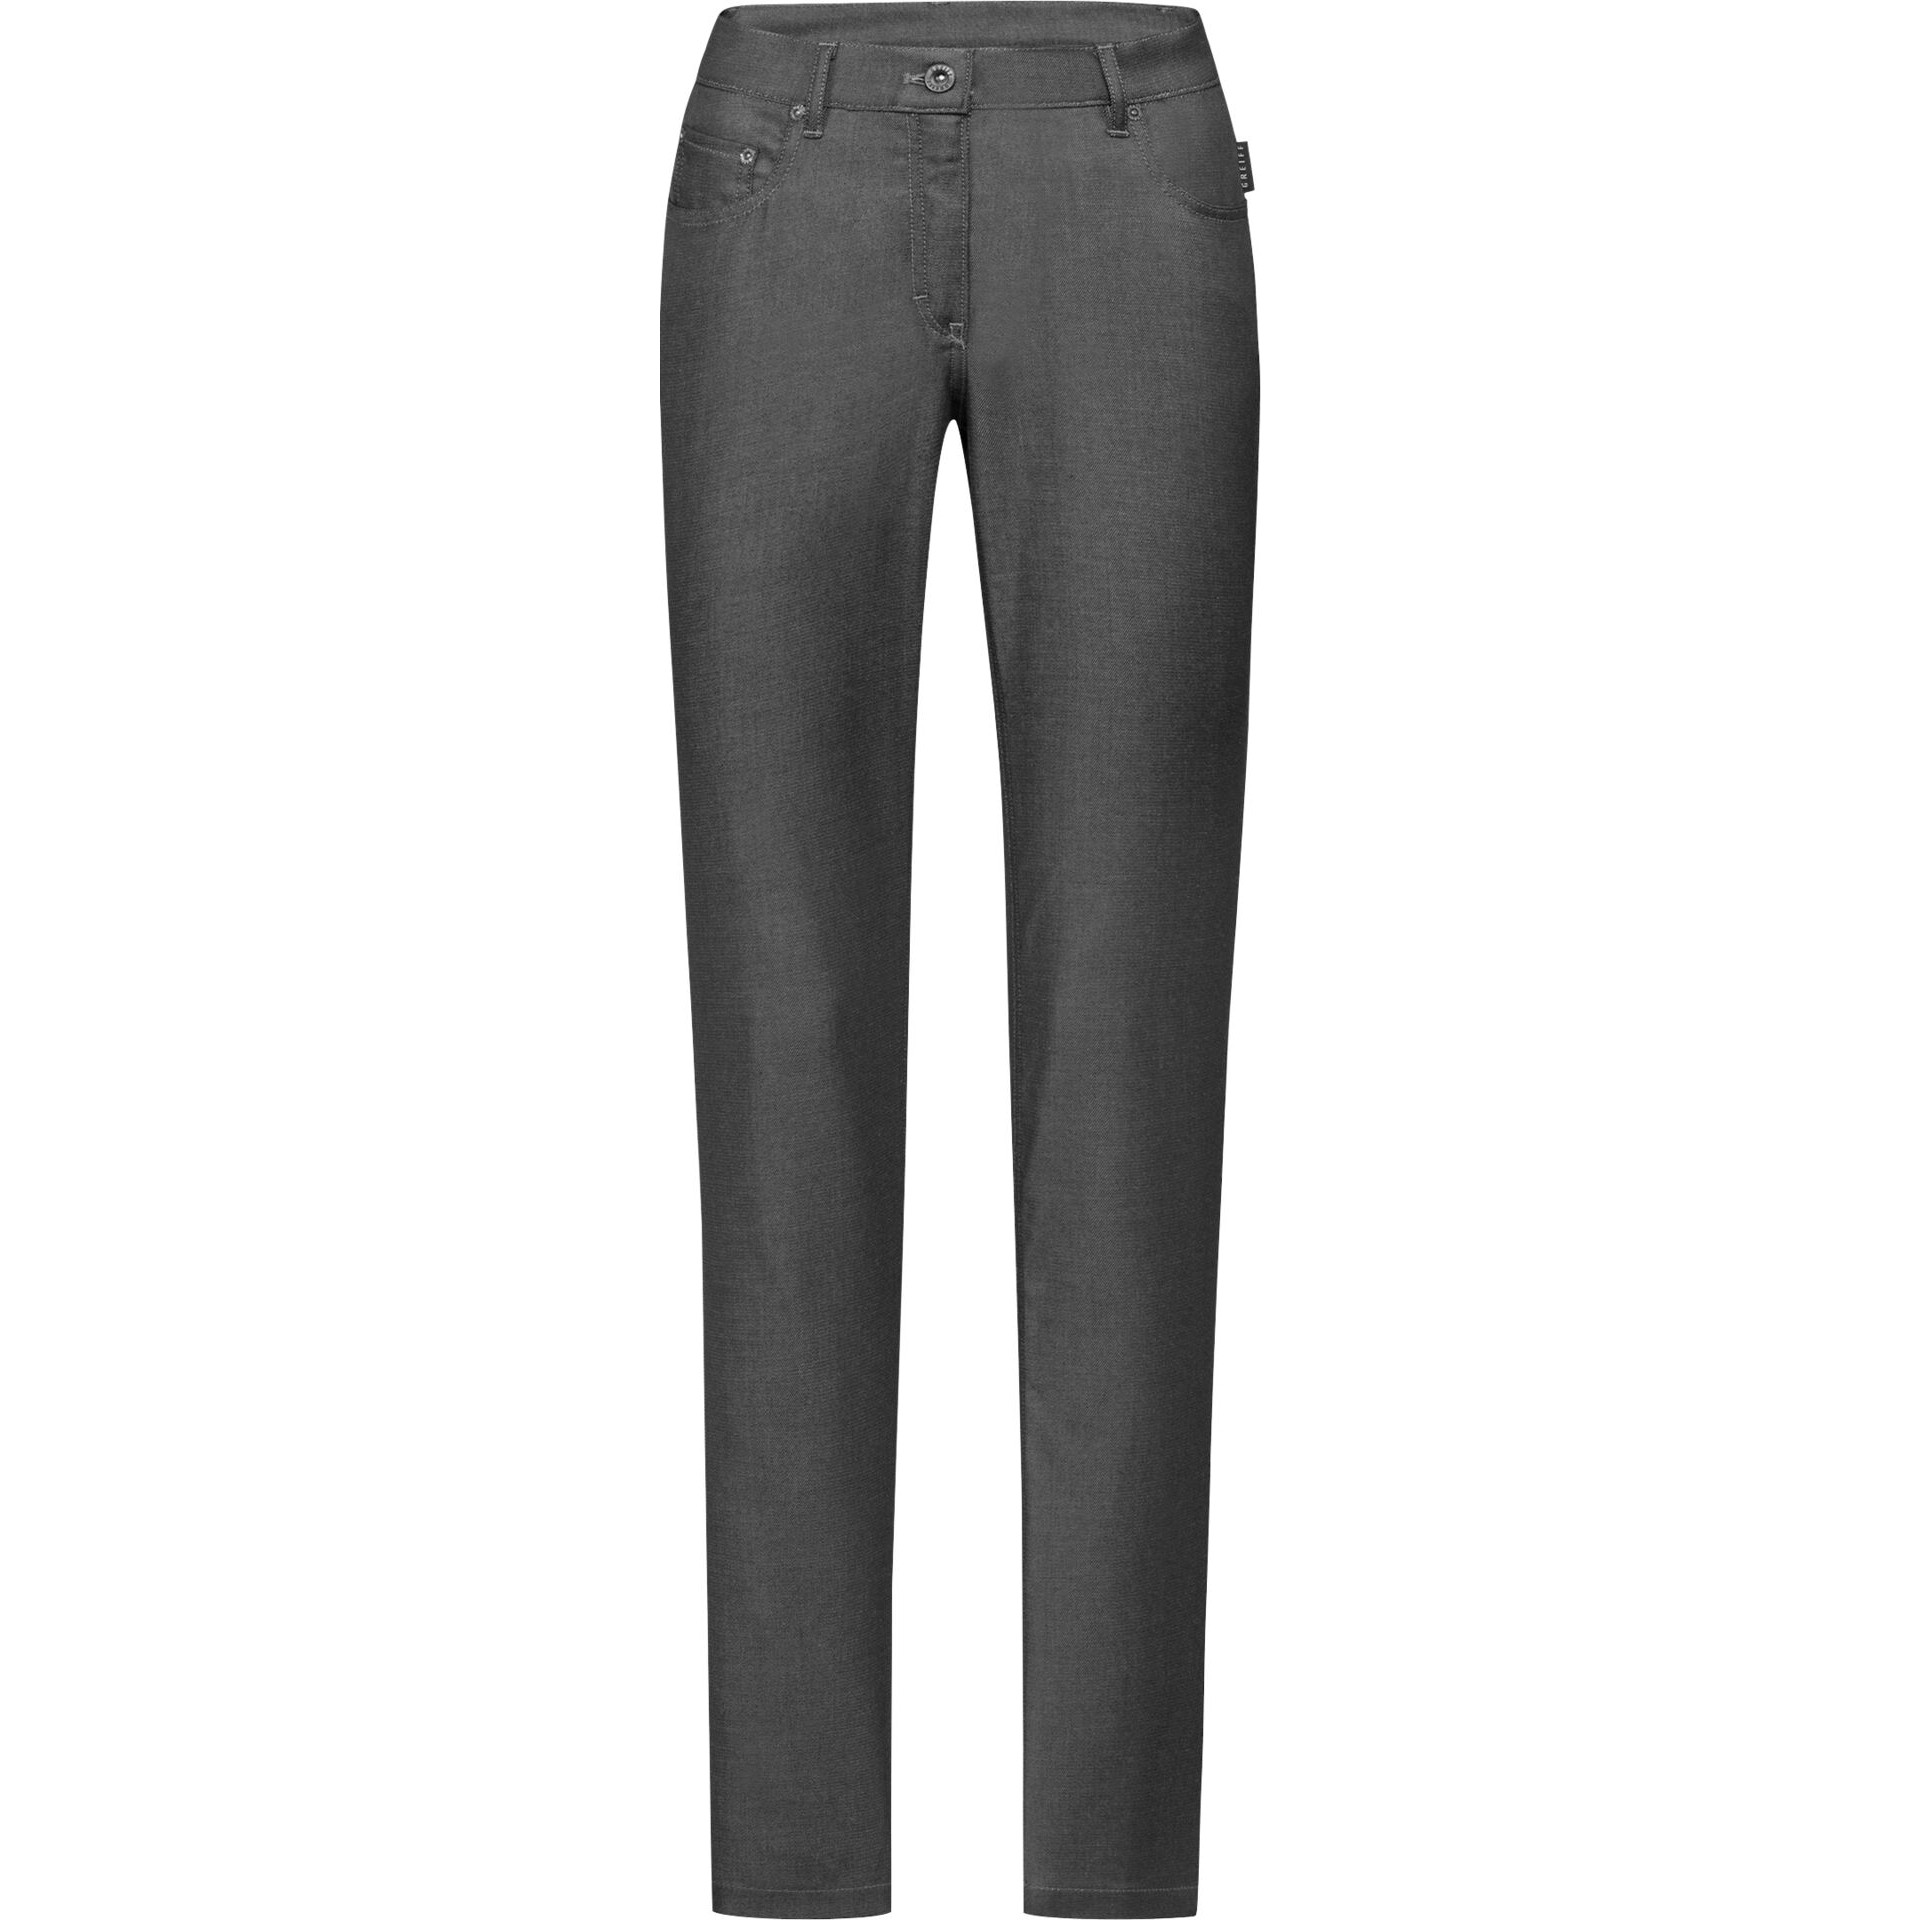 Damen-Kochhose Jeans-Style Größe 44